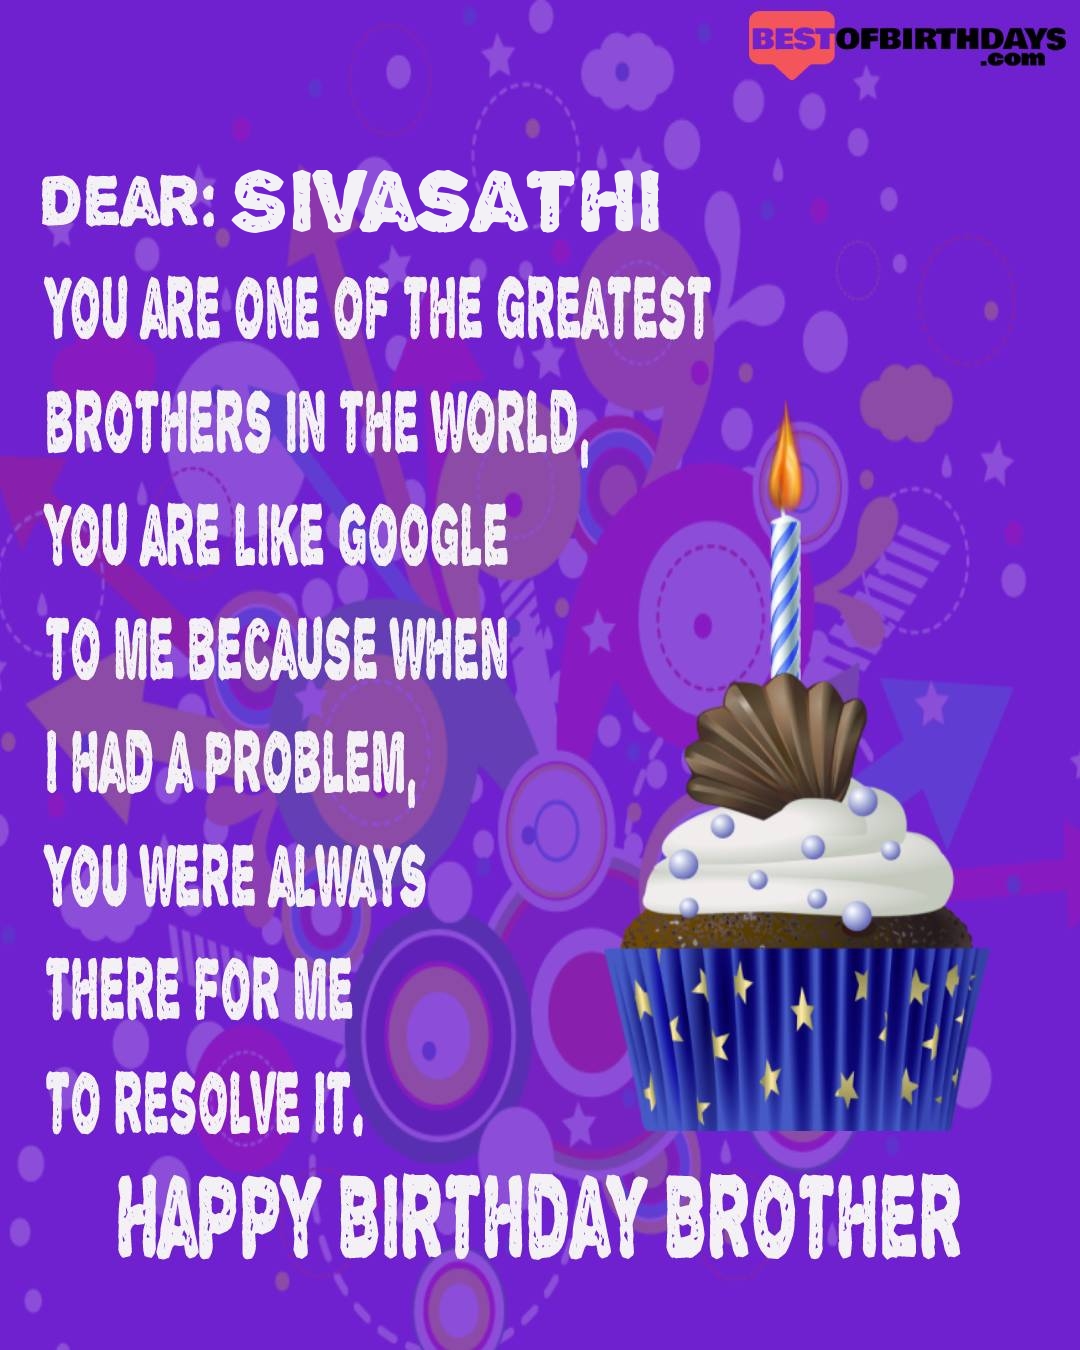 Happy birthday sivasathi bhai brother bro